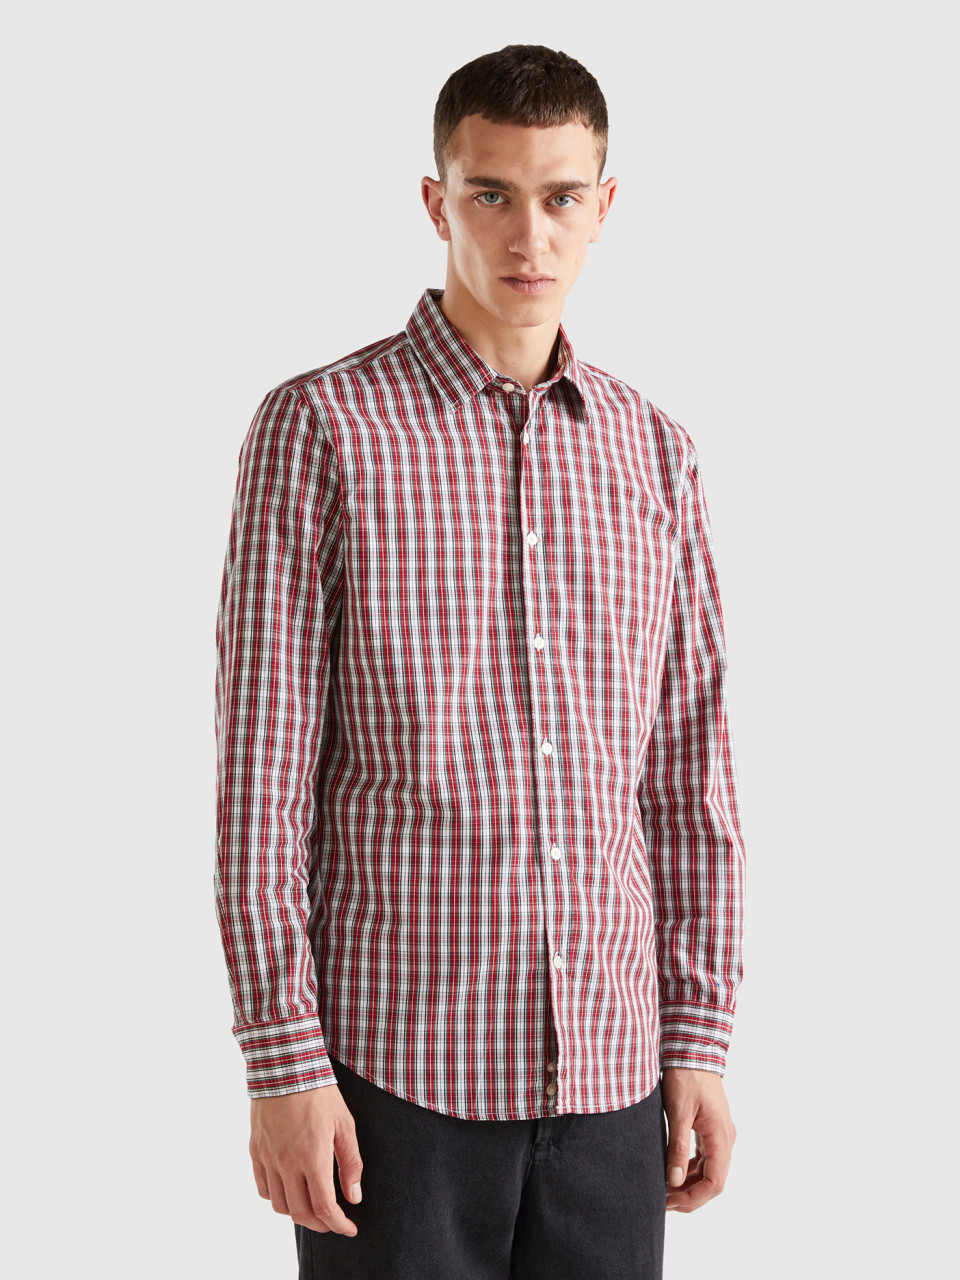 Benetton, 100% Organic Cotton Patterned Shirt, Multi-color, Men